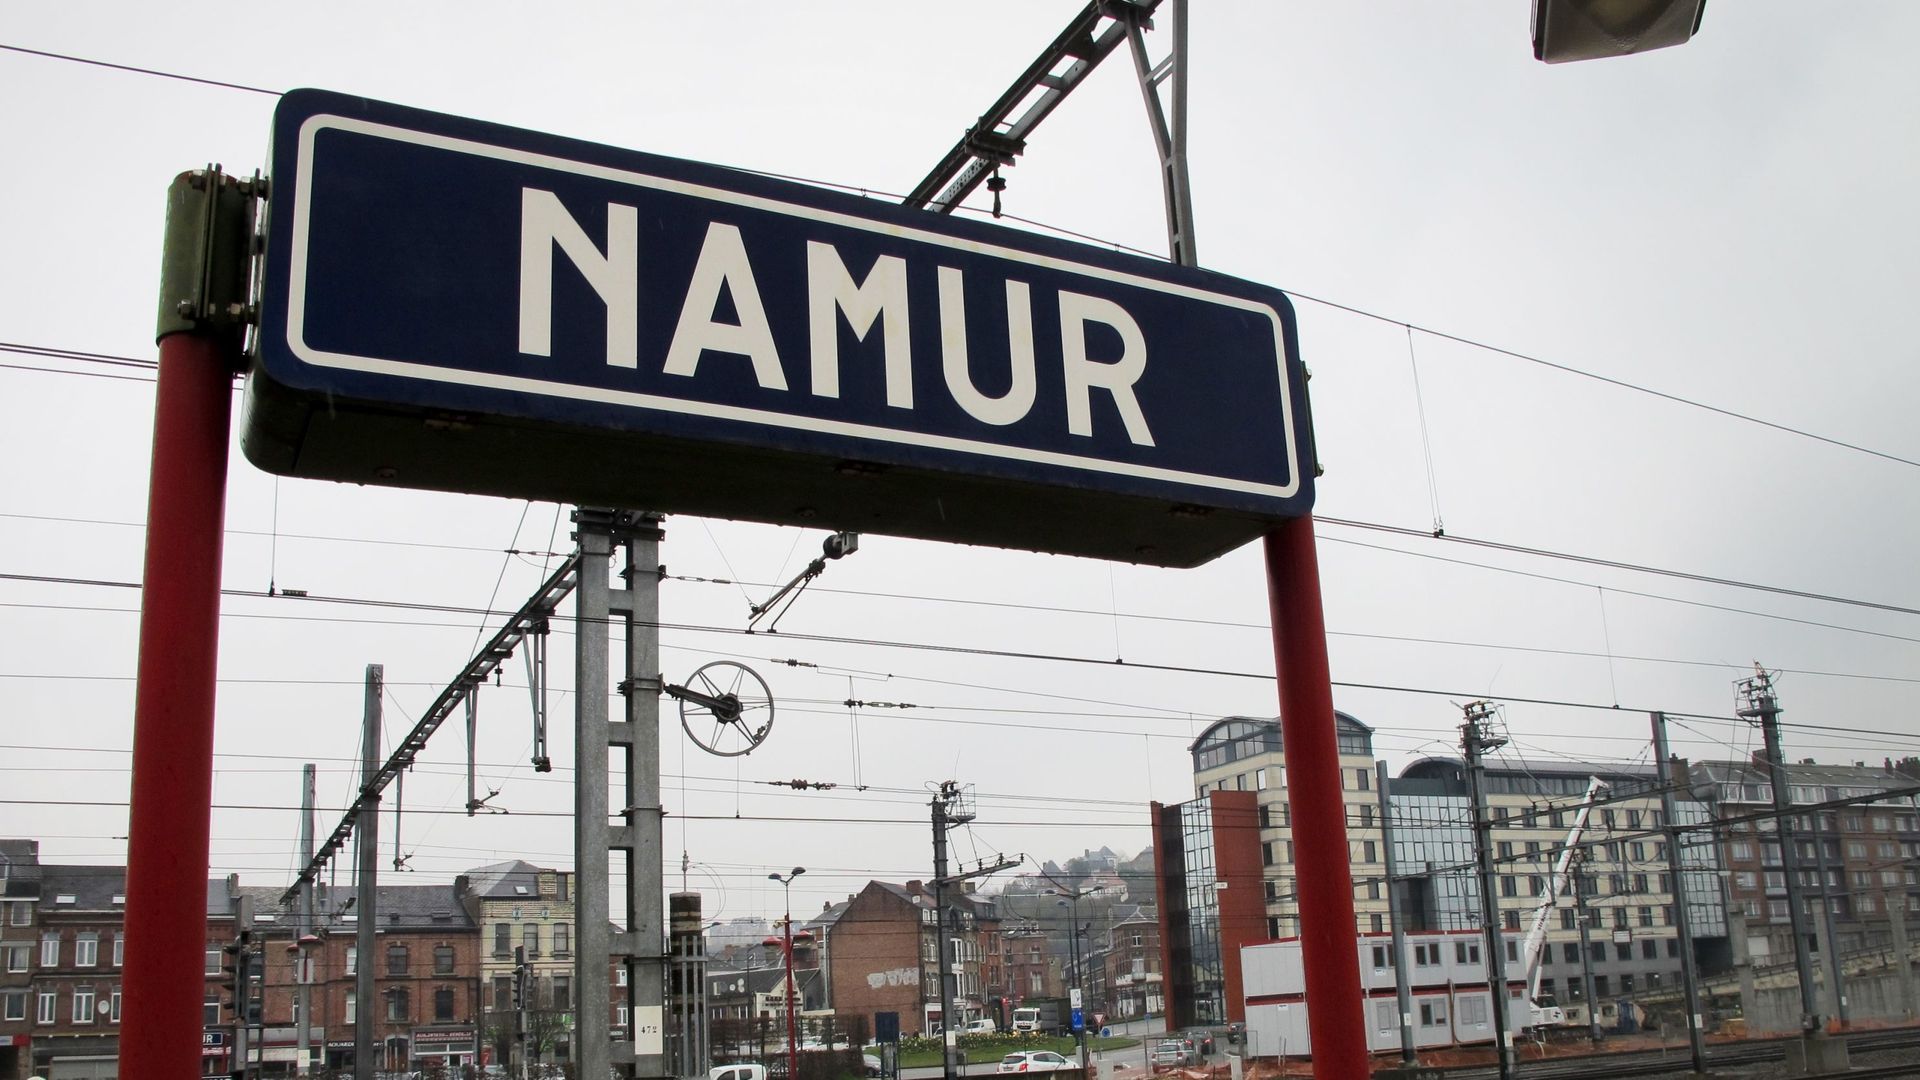 Dans la gare de Namur